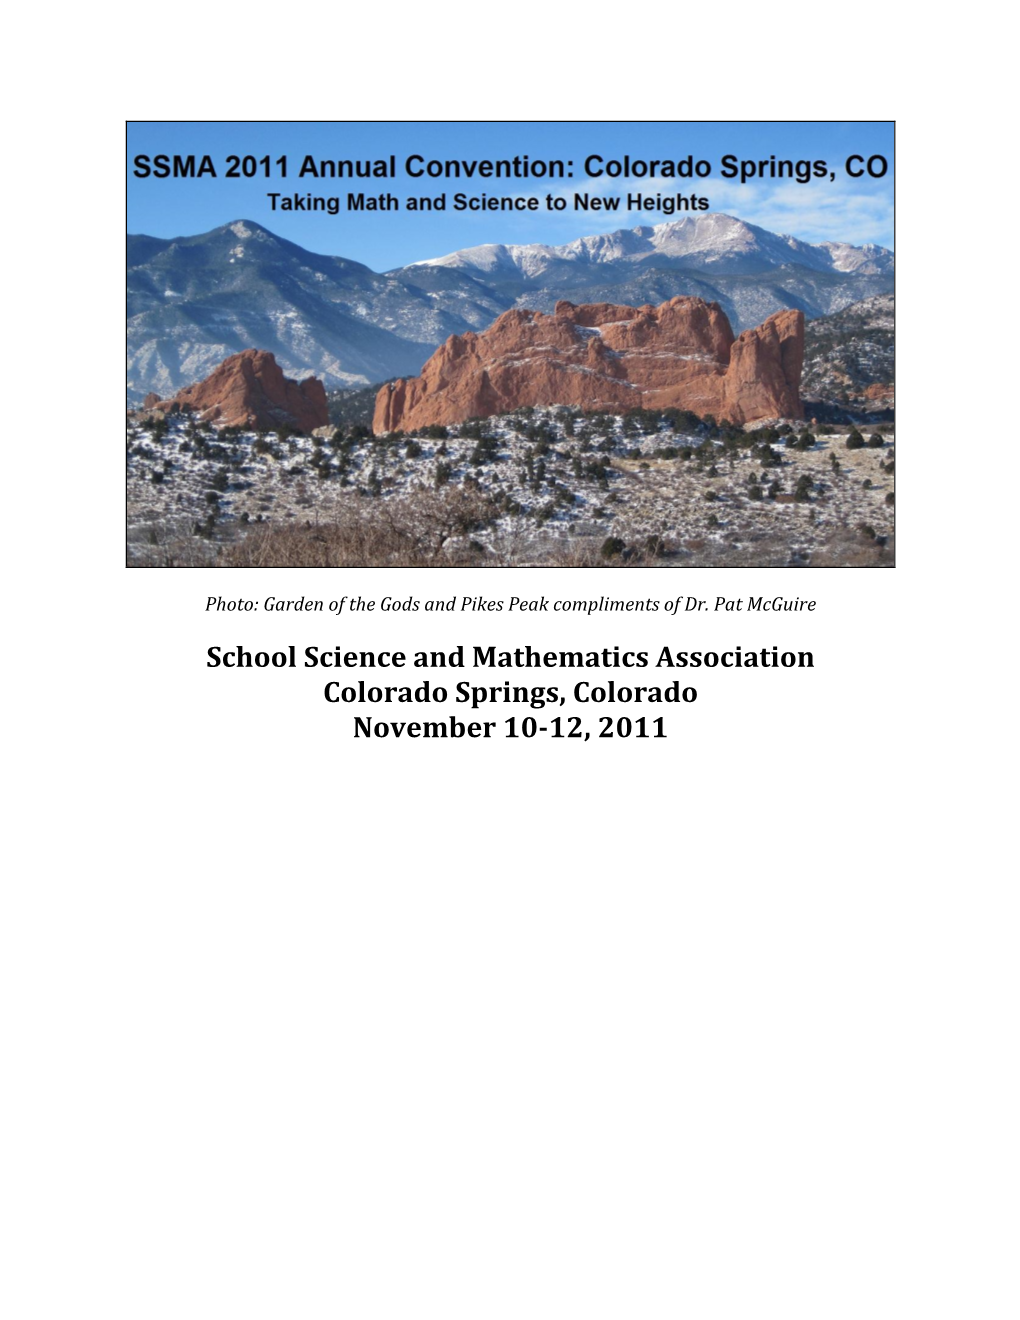 School Science and Mathematics Association Colorado Springs, Colorado November 10-12, 2011 2